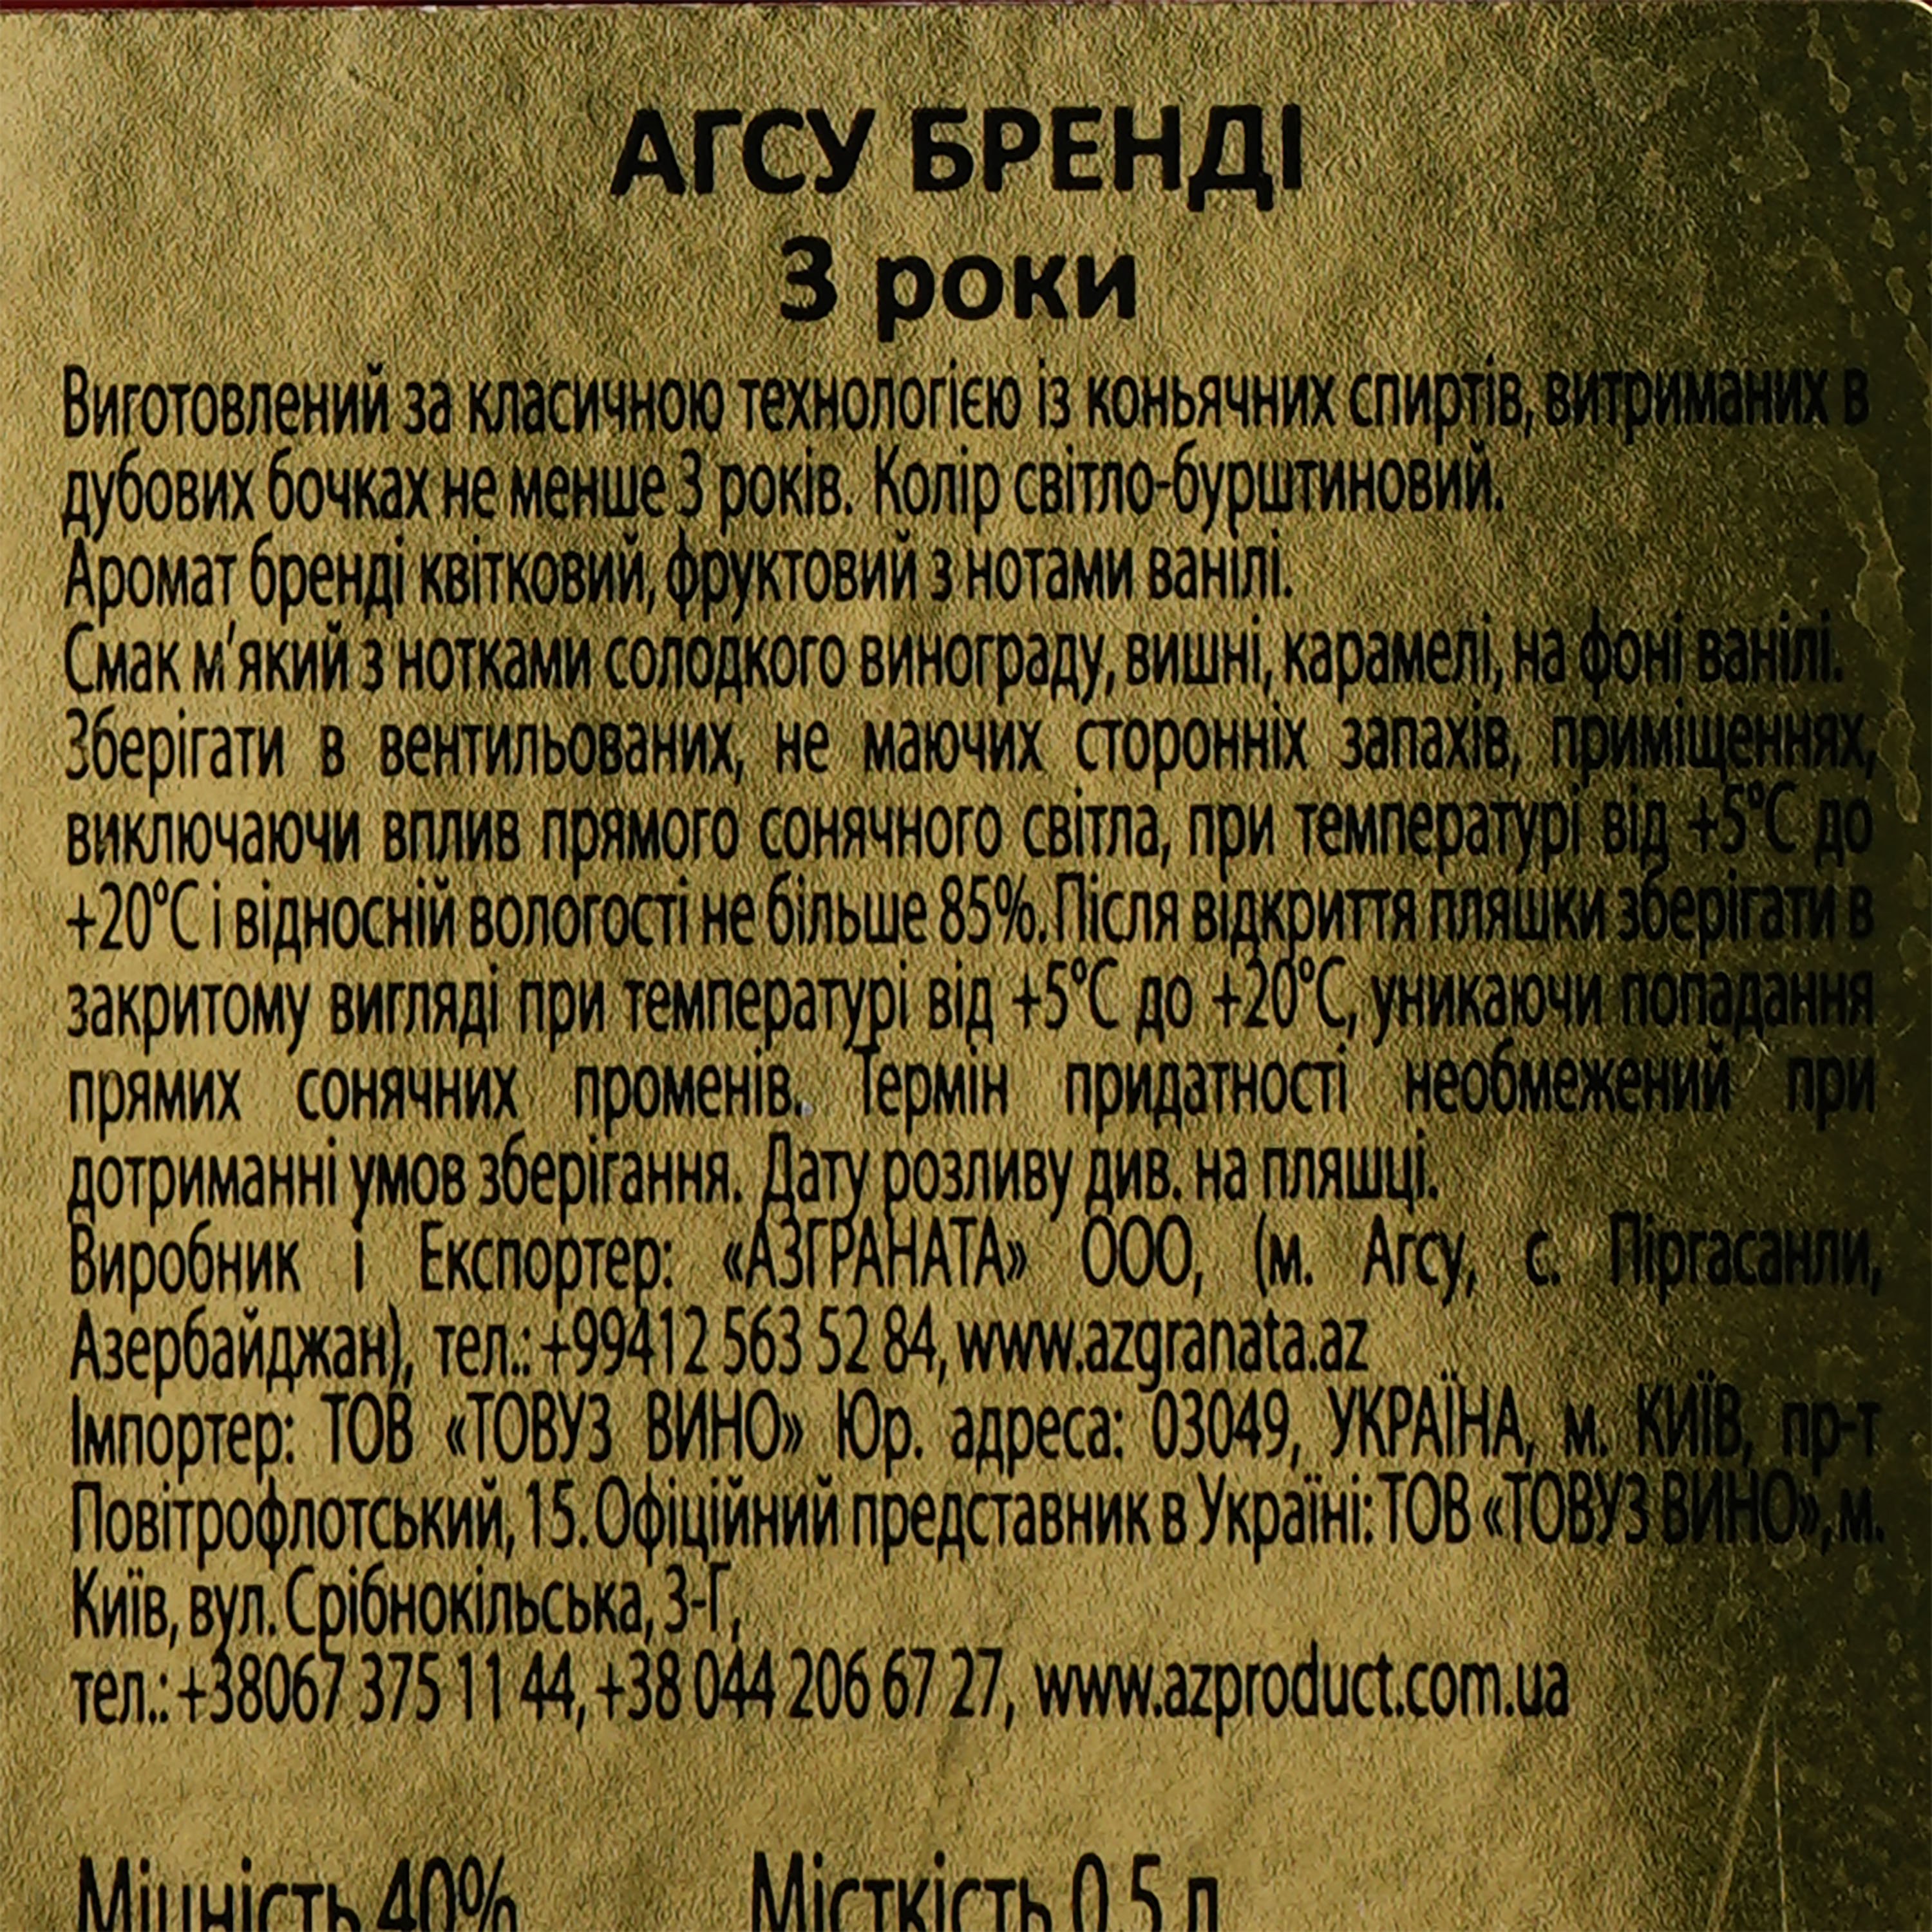 Бренди Az-Granata AGSU Premium 3 yo 40% 0.5 л - фото 3